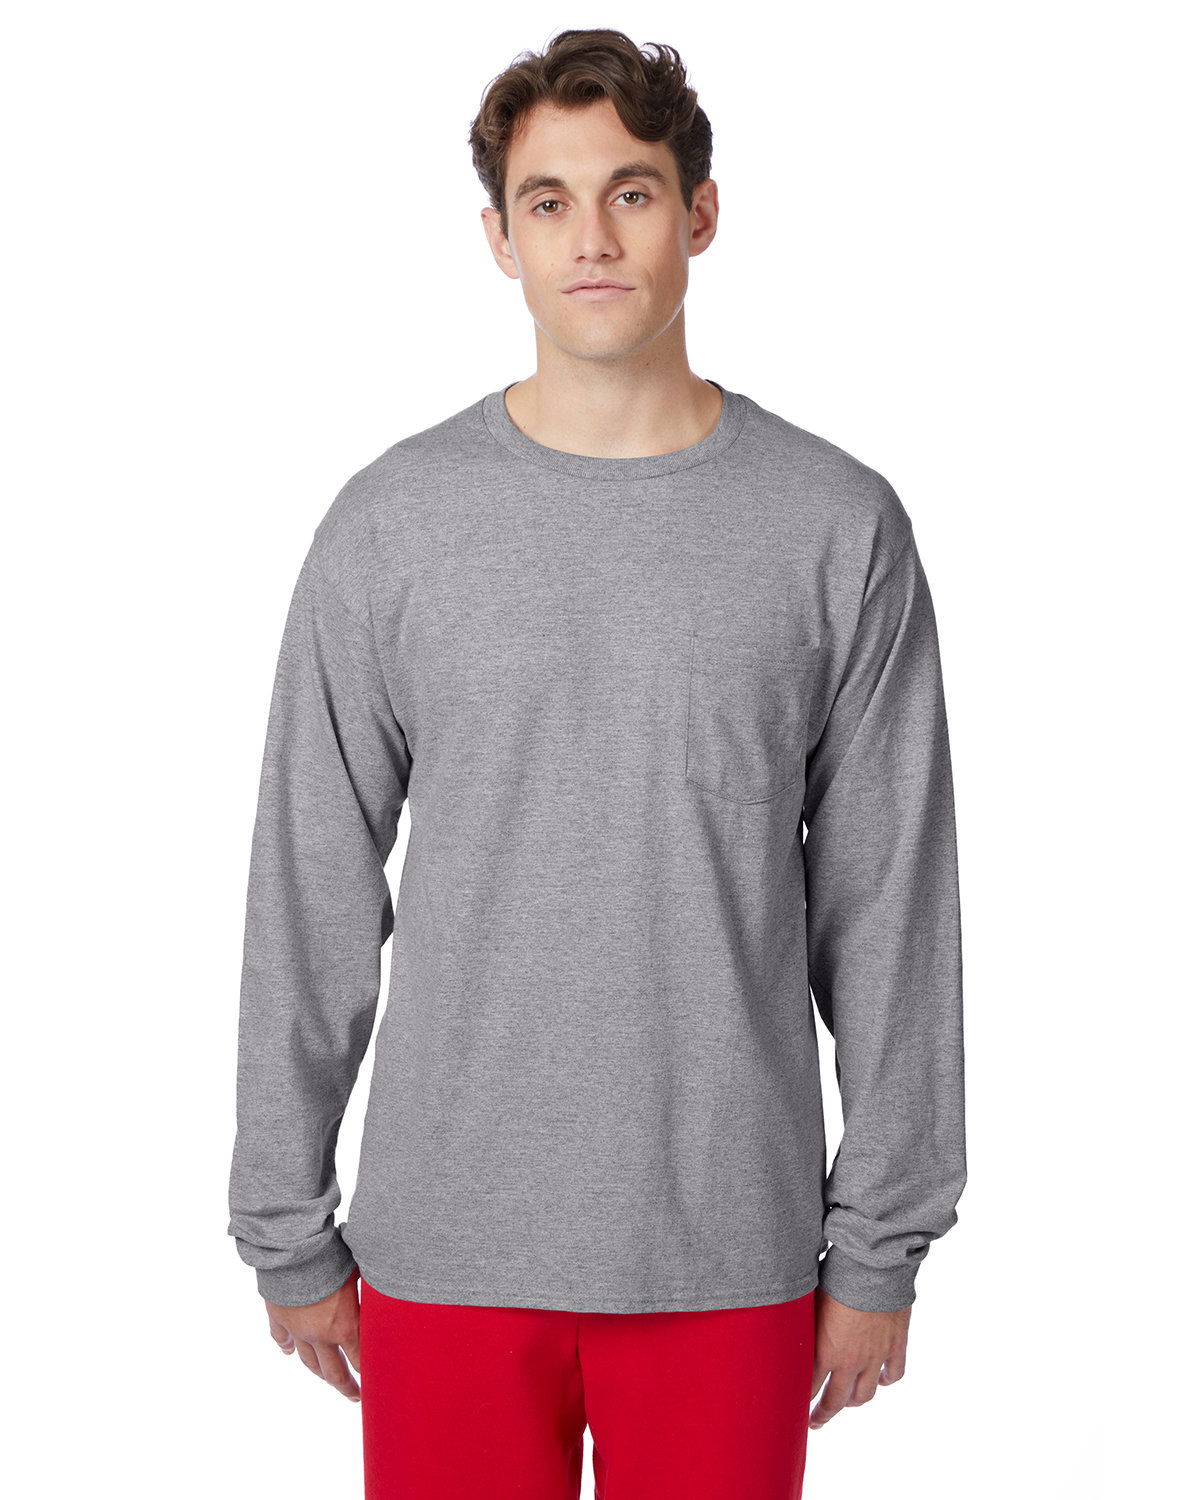 Hanes Men's Authentic-T Long-Sleeve Pocket T-Shirt OXFORD GRAY 